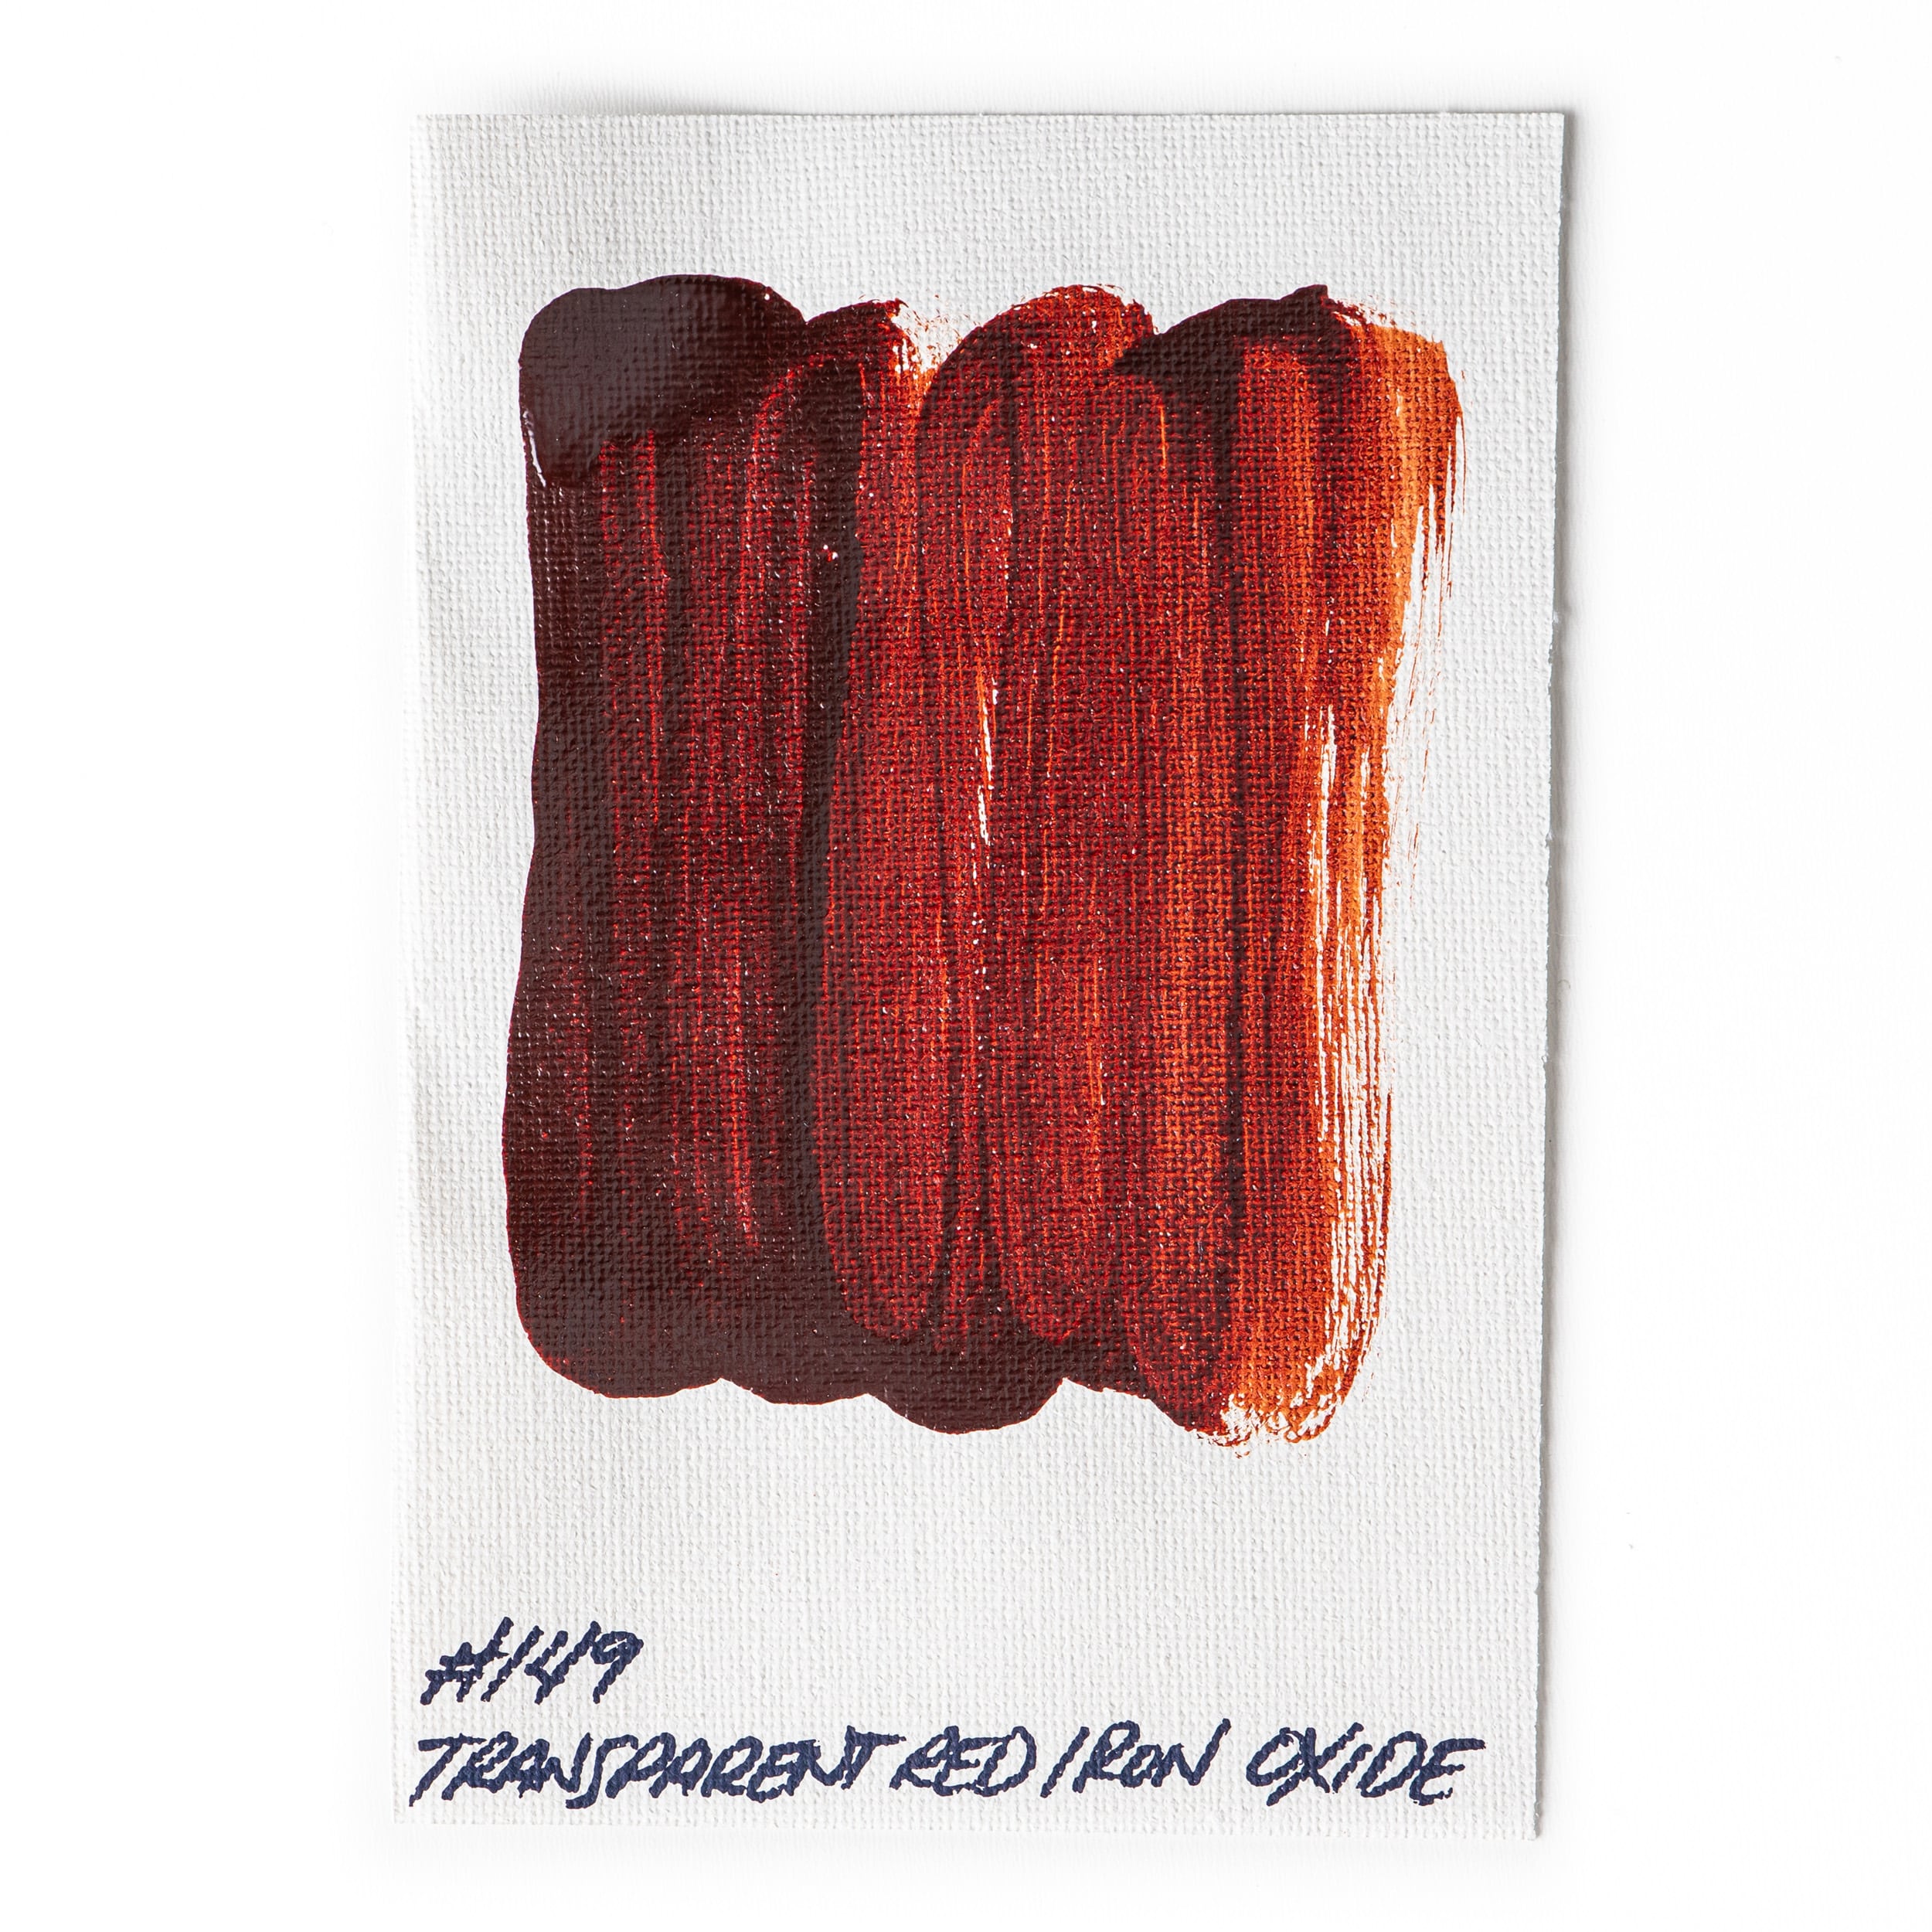 Buy #149 Transparent Red Iron Oxide - Lightfastness:, - Transparent Online